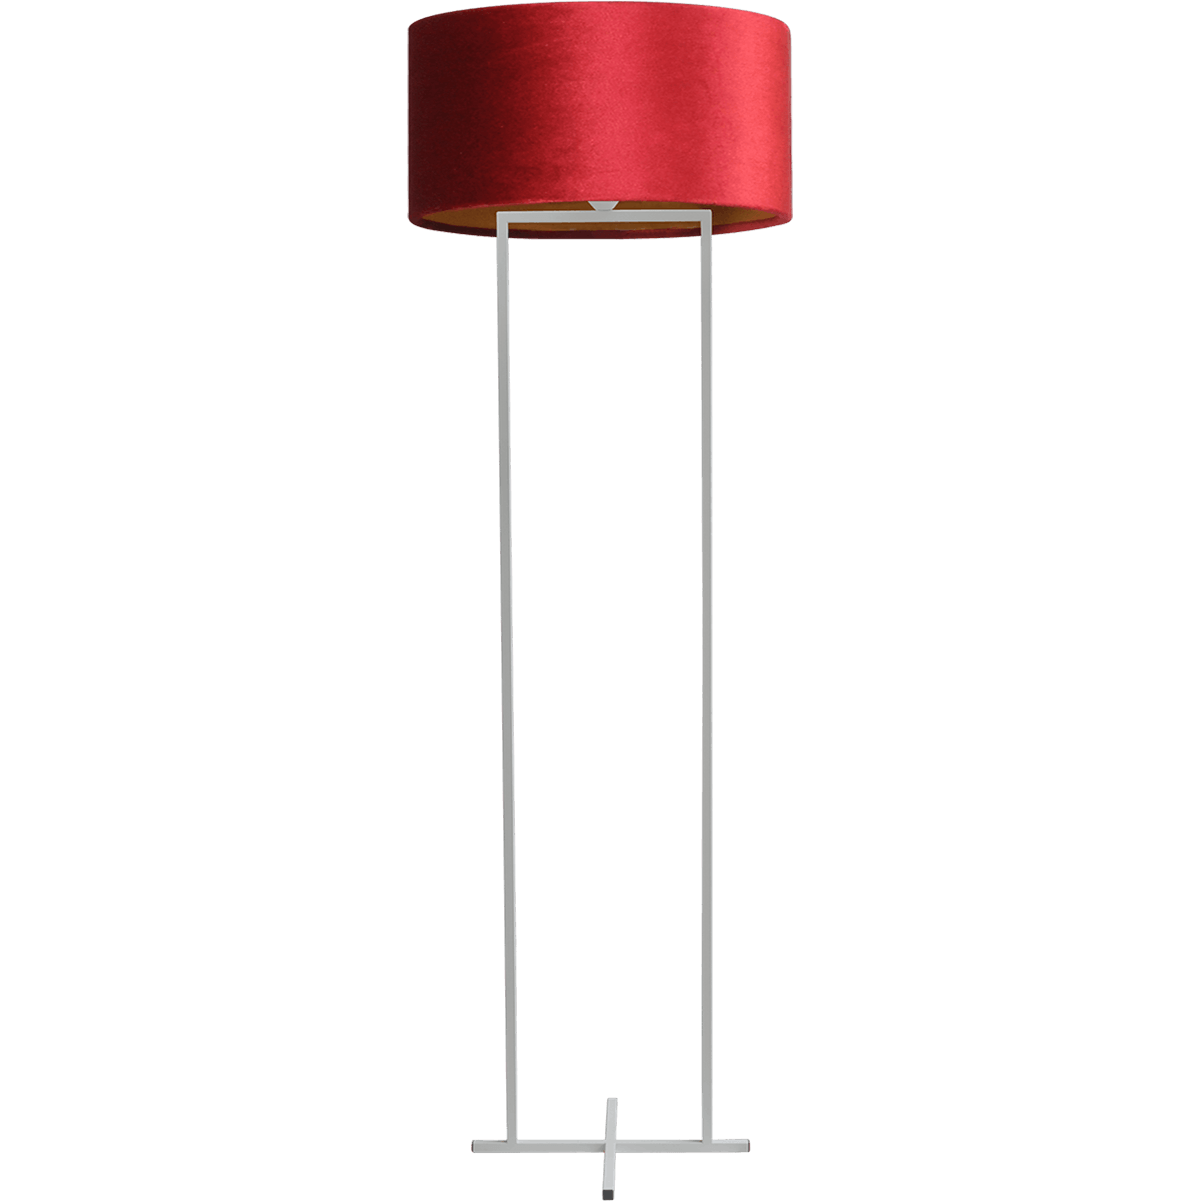 Vloerlamp Cross Rectangle wit structuur hoogte 158cm inclusief rode lampenkap Artik red 52/52/25 - MASTERLIGHT